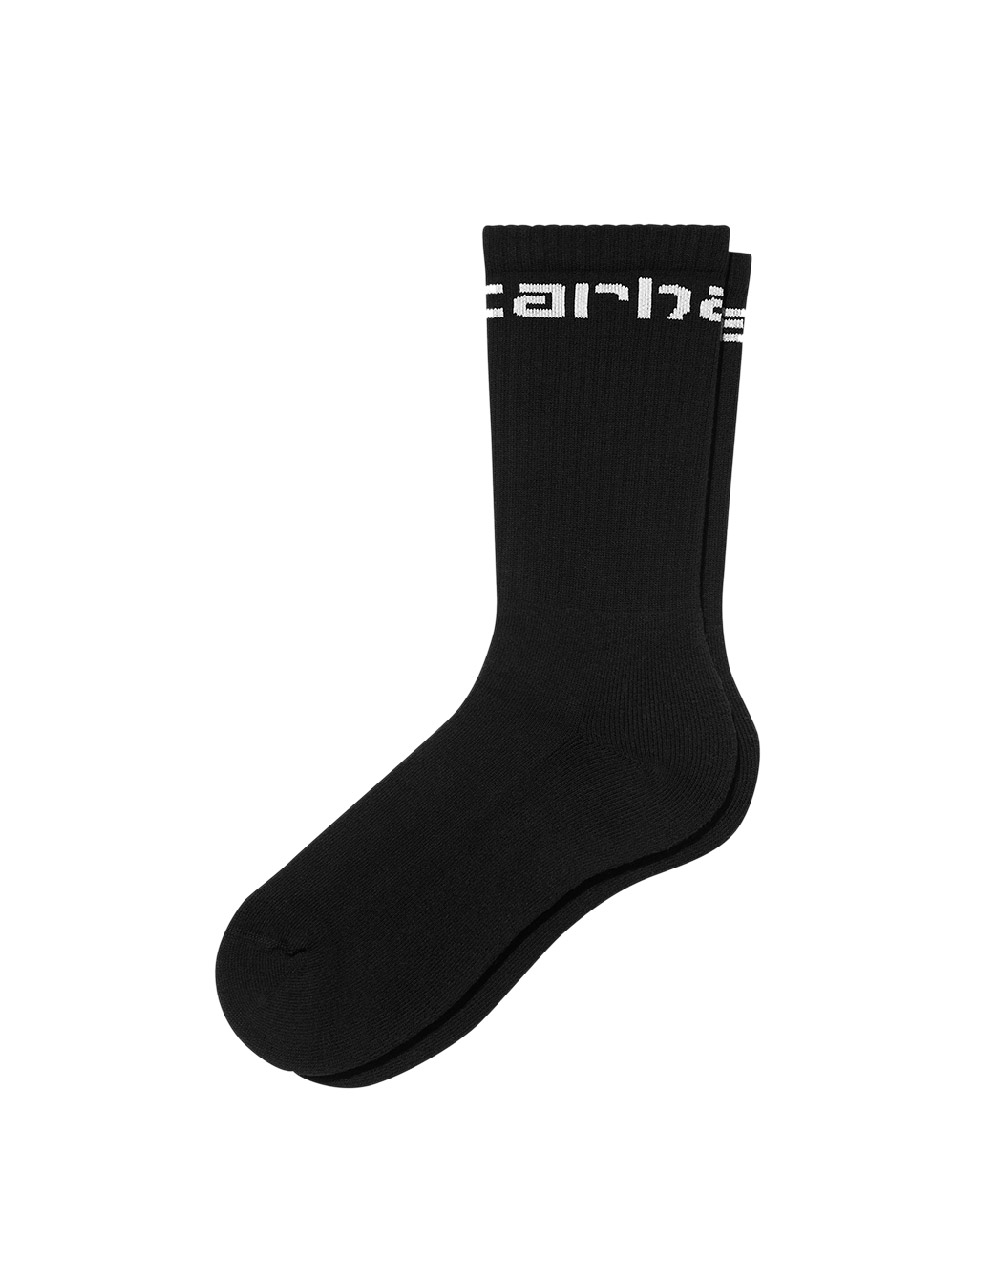 Carhartt WIP – Carhartt Socks